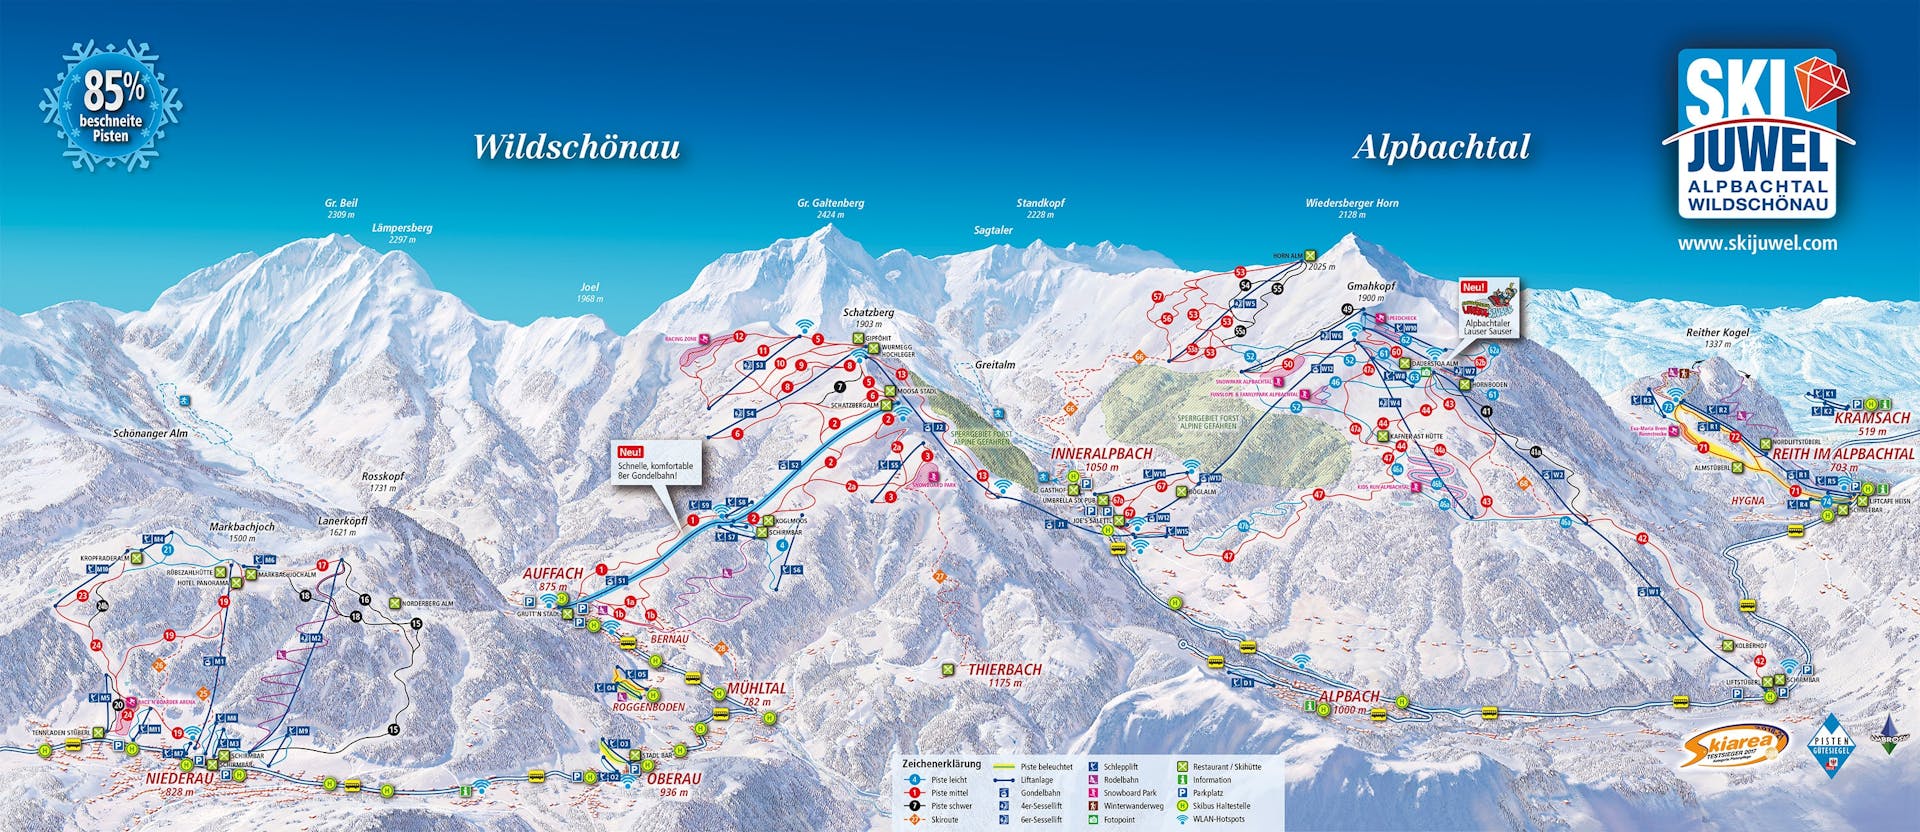 Niederau-Wildschonau ski map